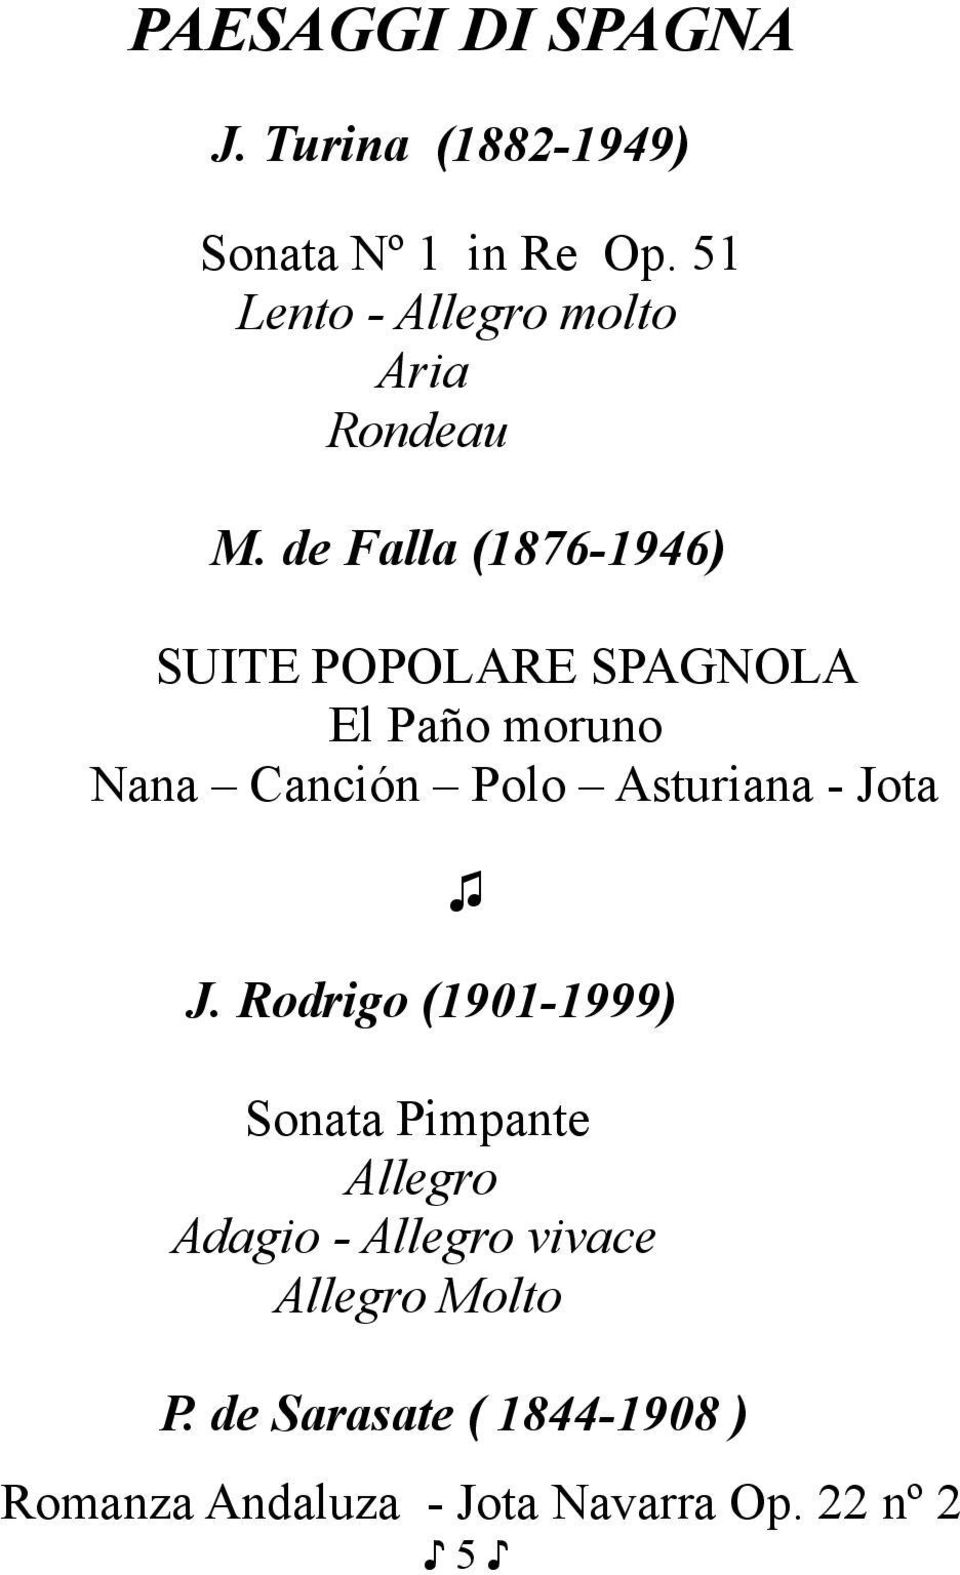 de Falla (1876-1946) SUITE POPOLARE SPAGNOLA El Paño moruno Nana Canción Polo Asturiana -